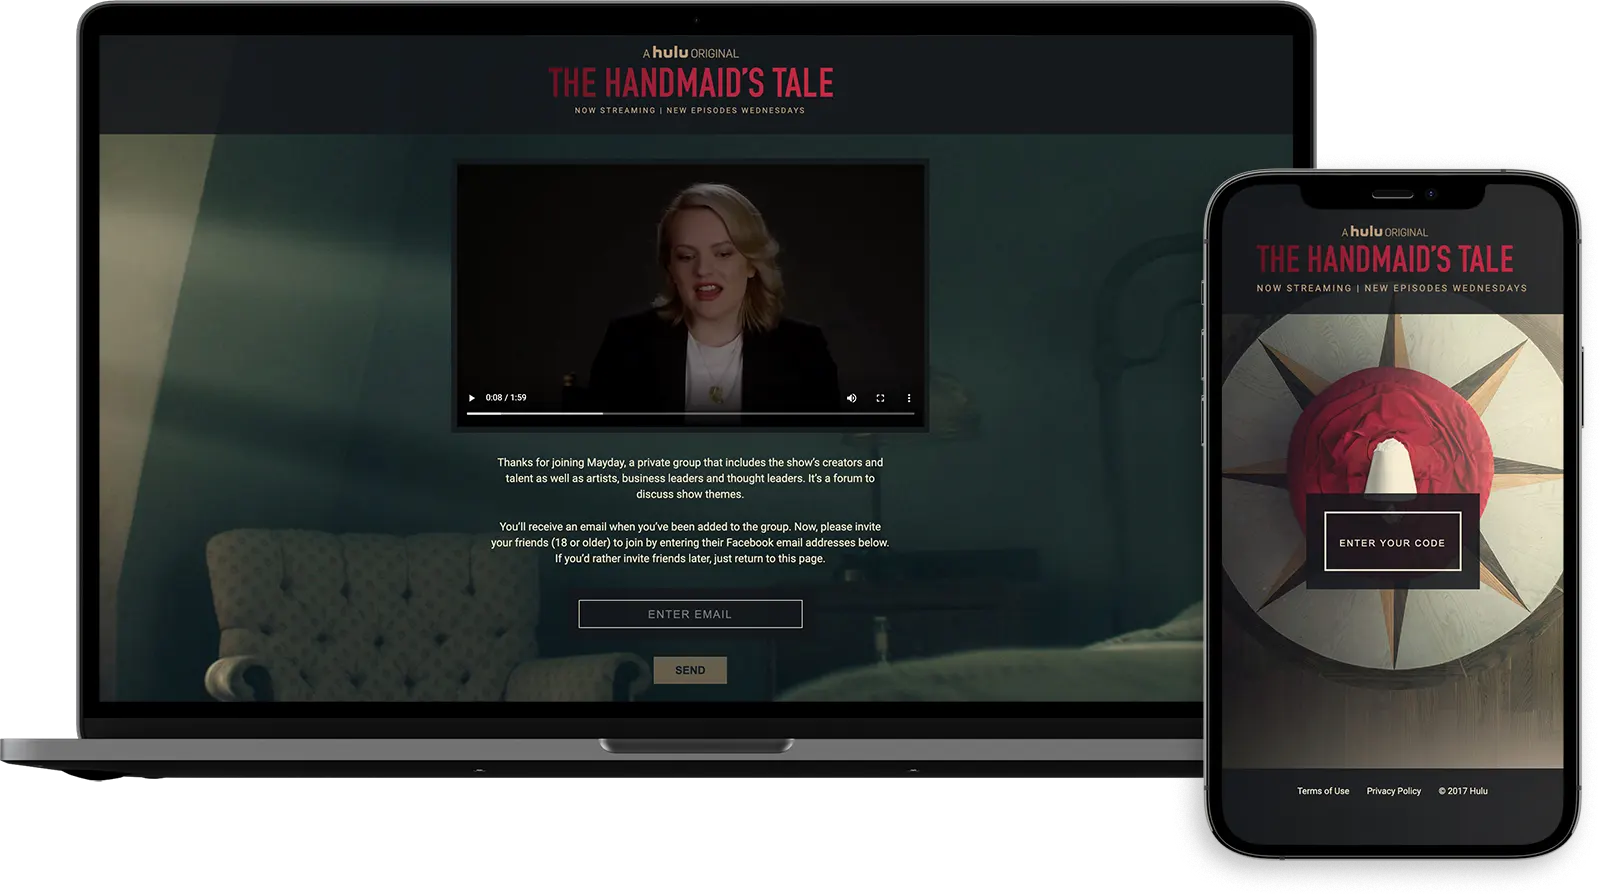 Hulu The Handmaid's Tale Social Campaign